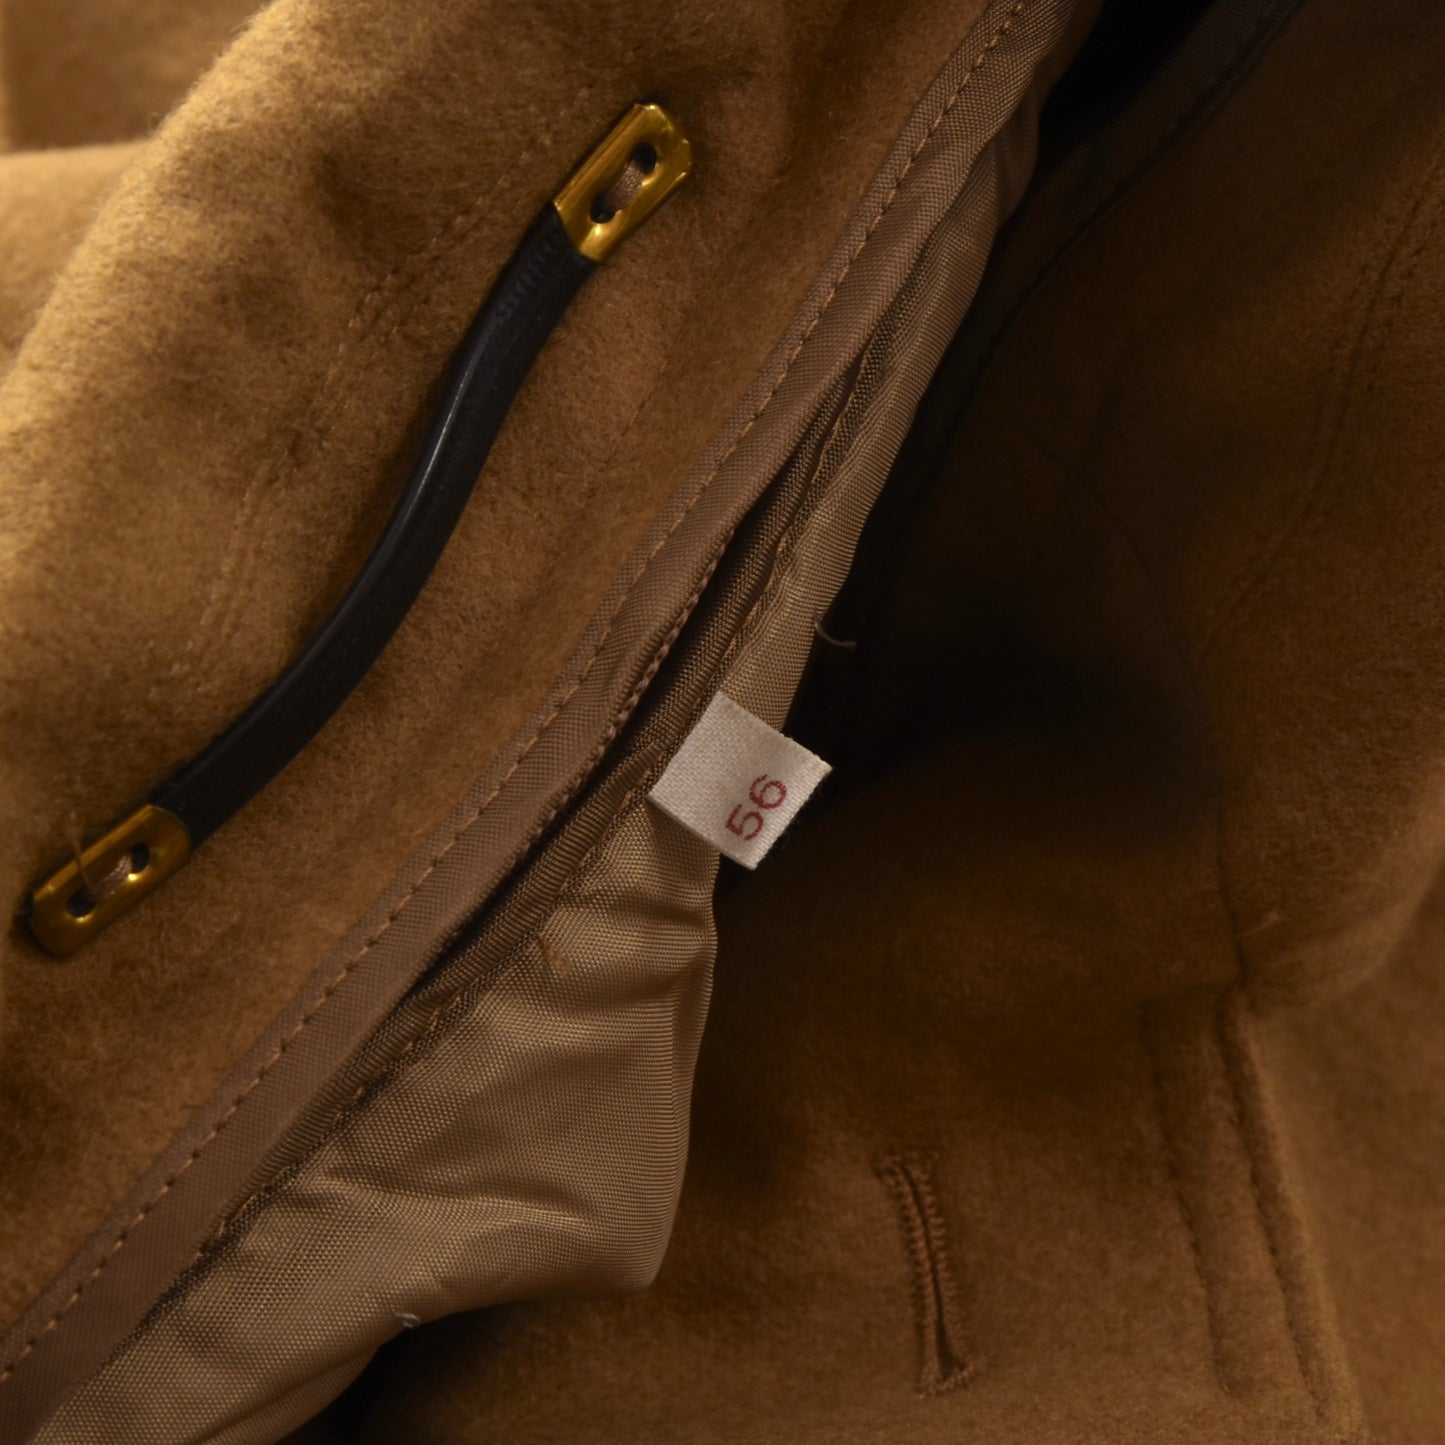 Orig. Dachstein Wool Overcoat Size 56 - Camel/Mustard